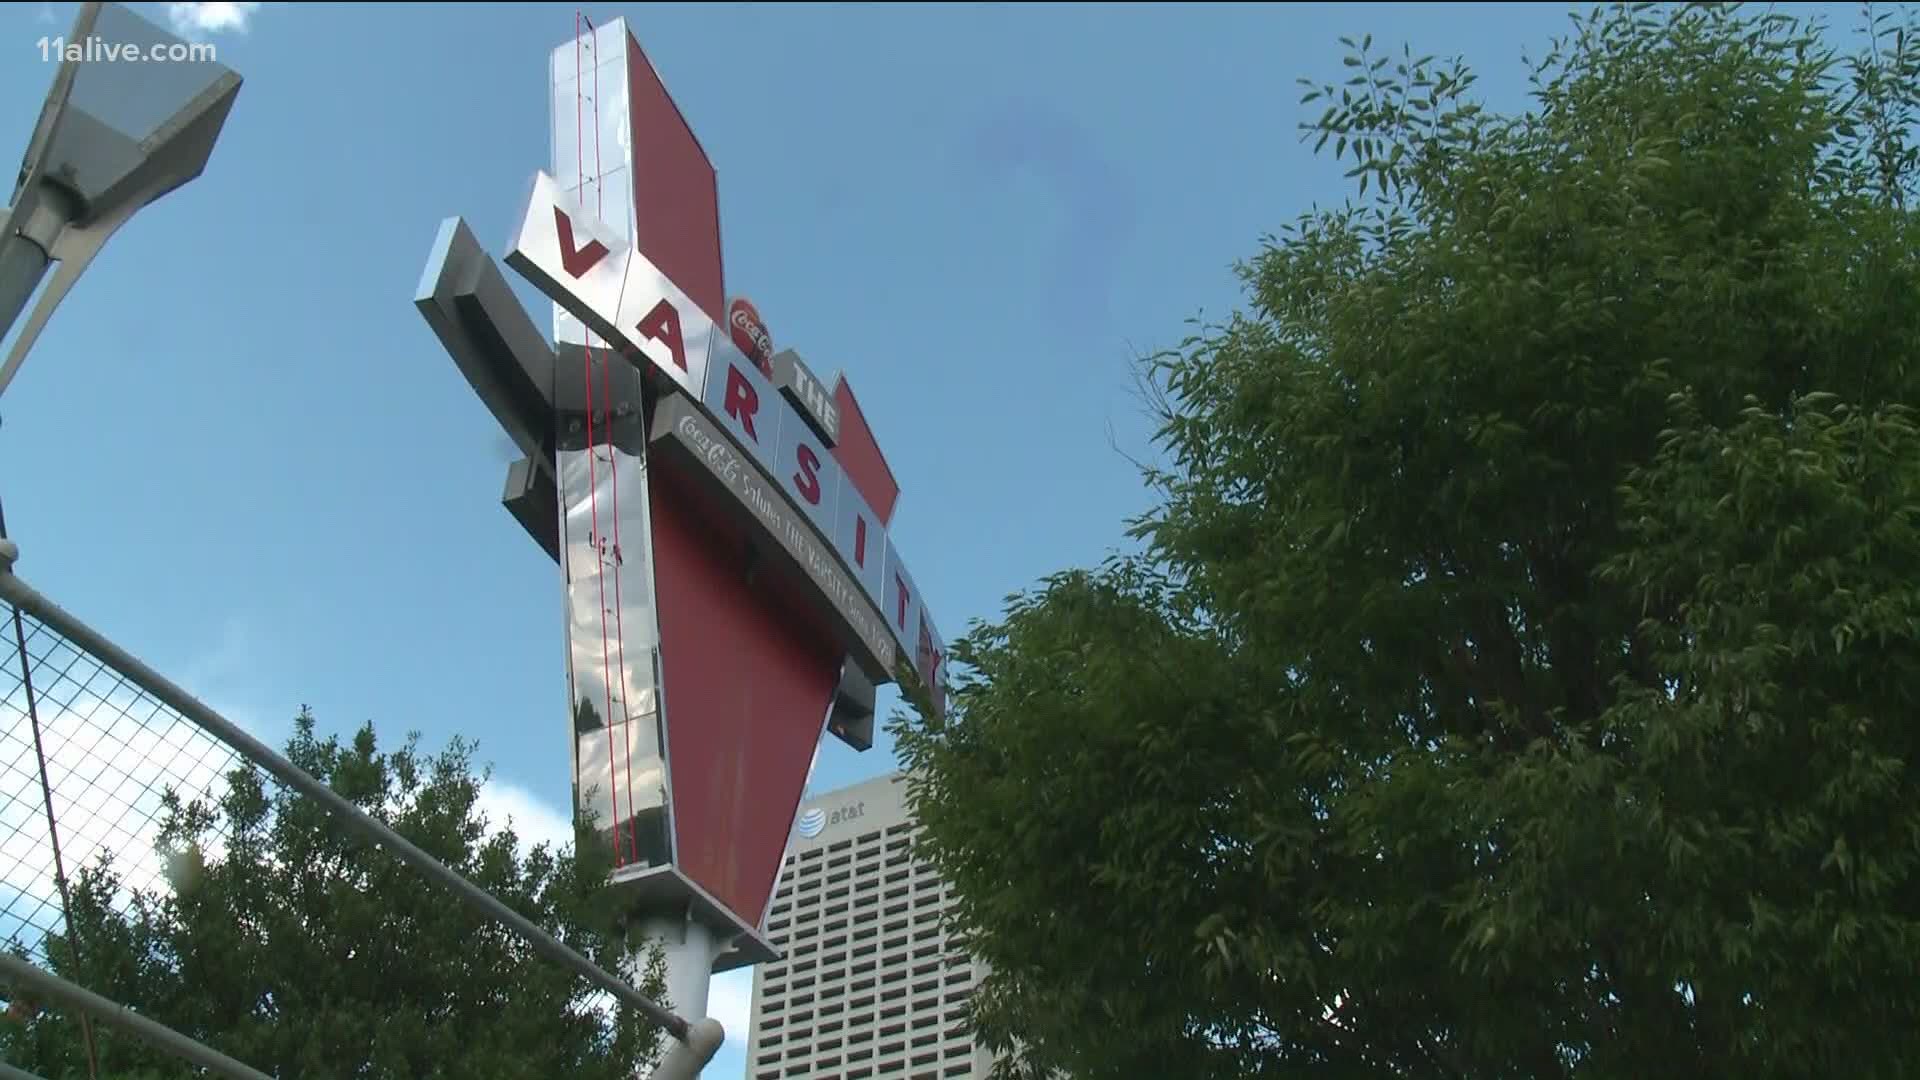 The Atlanta landmark shut down on Thursday after an employee tested positive for COVID-19